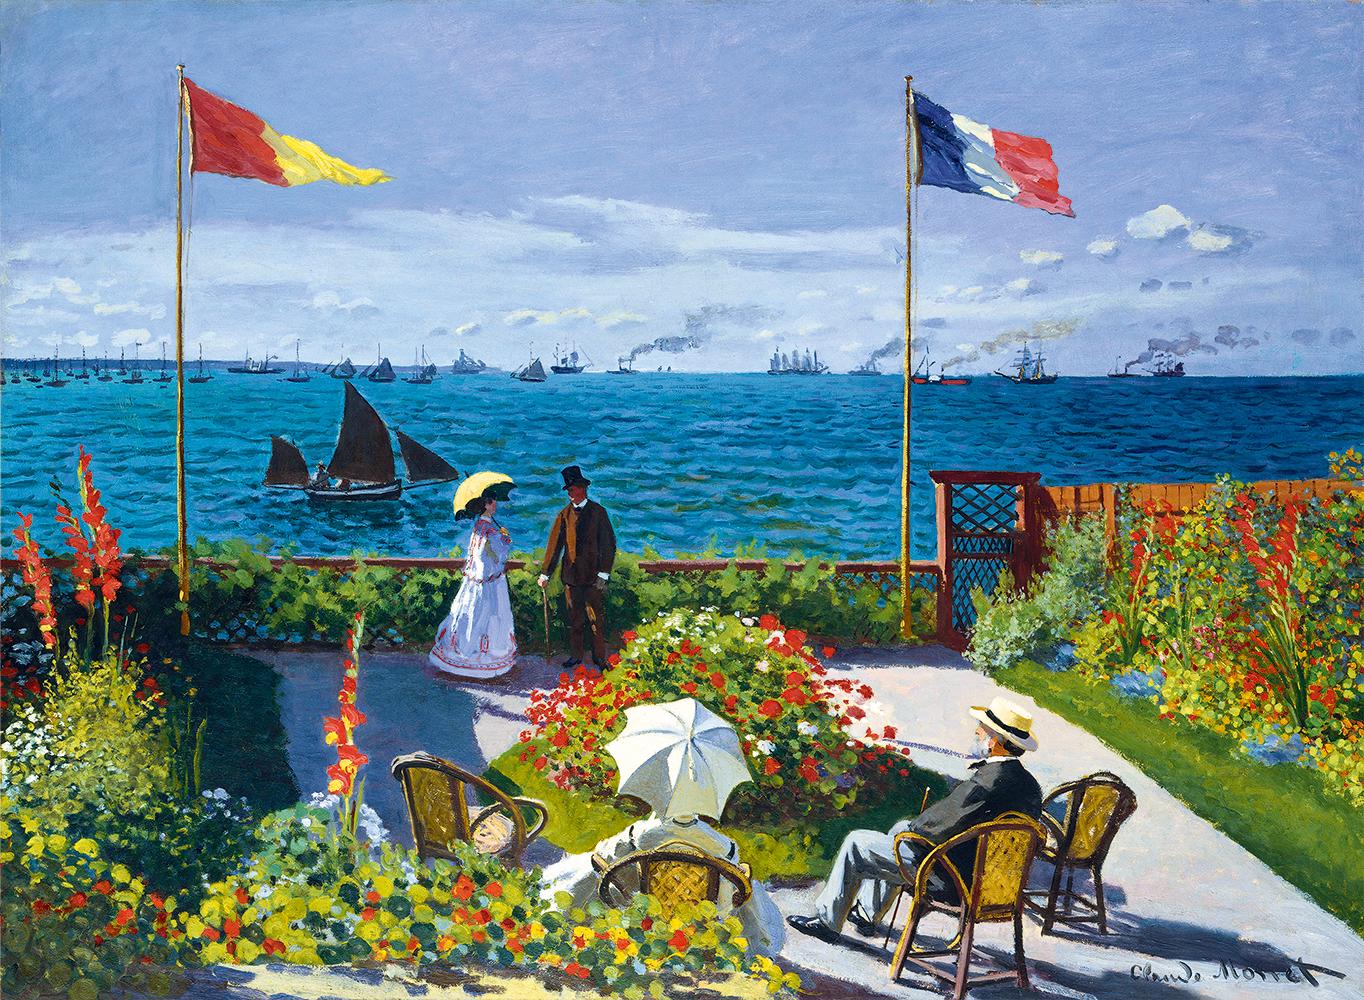 Puzzle Claude Monet - Garden at Sainte-Adresse, 1867